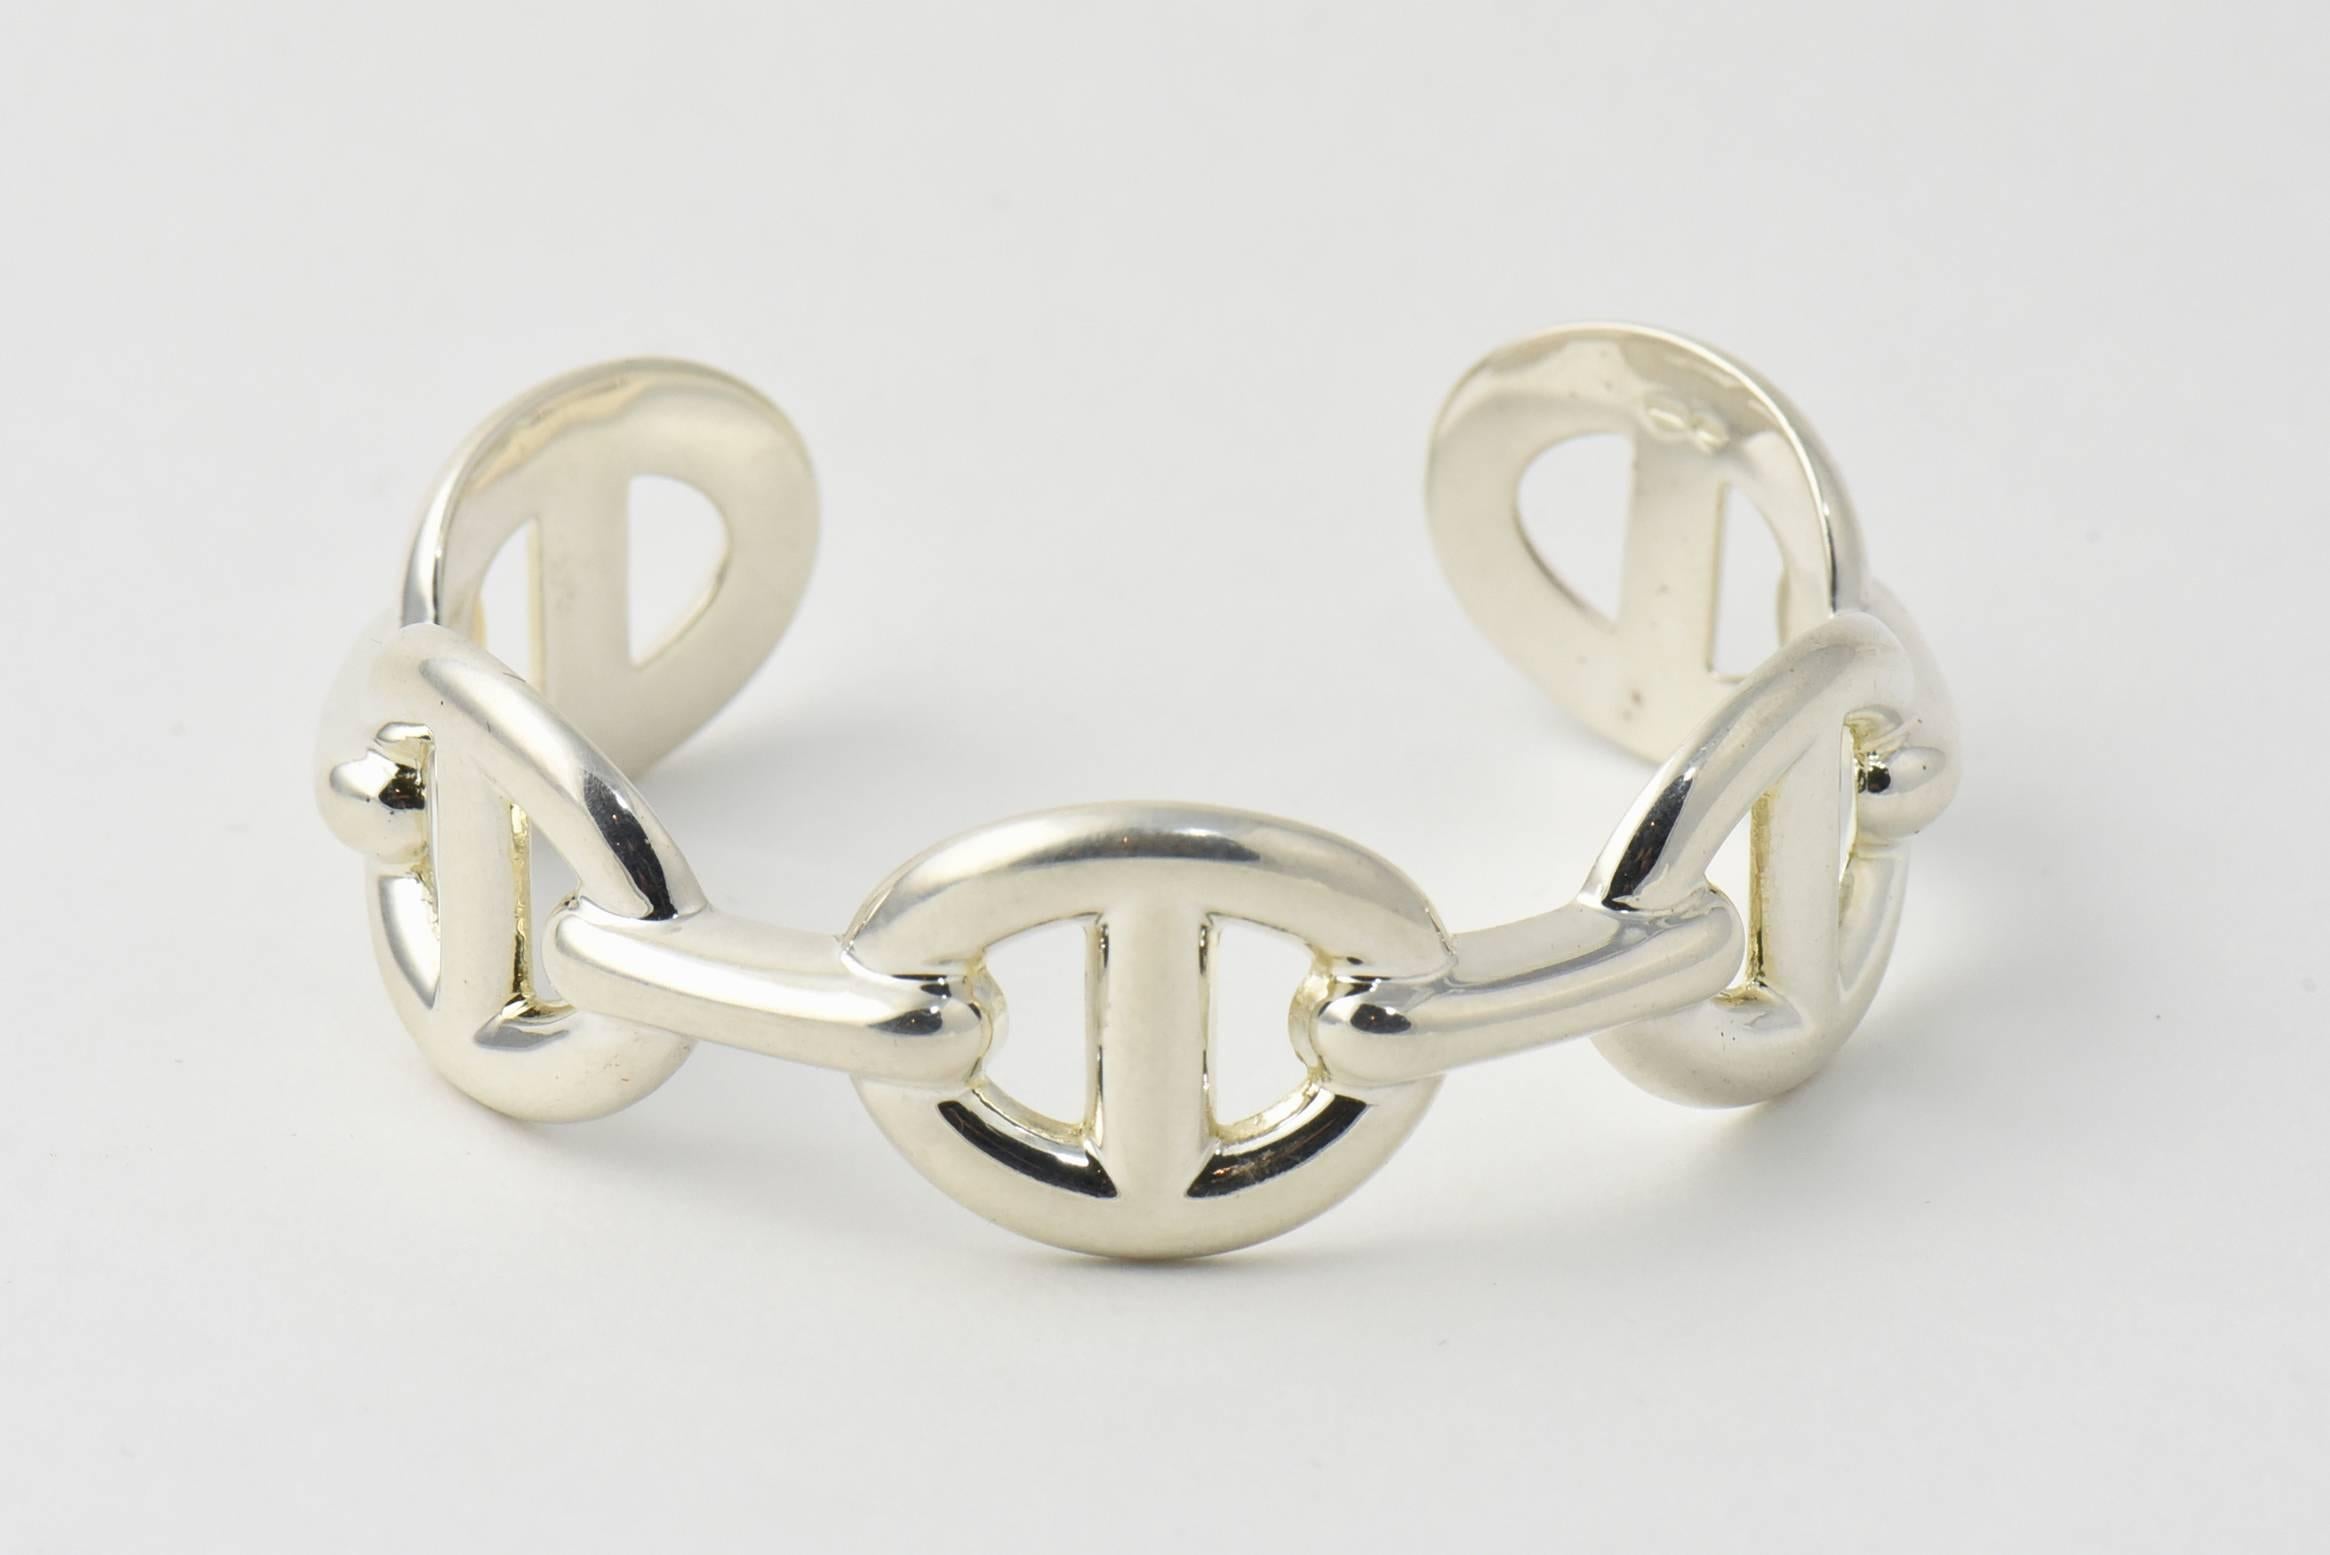 Chaîne d'Ancre Enchaînée Silver Cuff Bracelet 
Hermes bracelet in silver,
Silver 925/1000
Retail $1,125.00

approximately 6